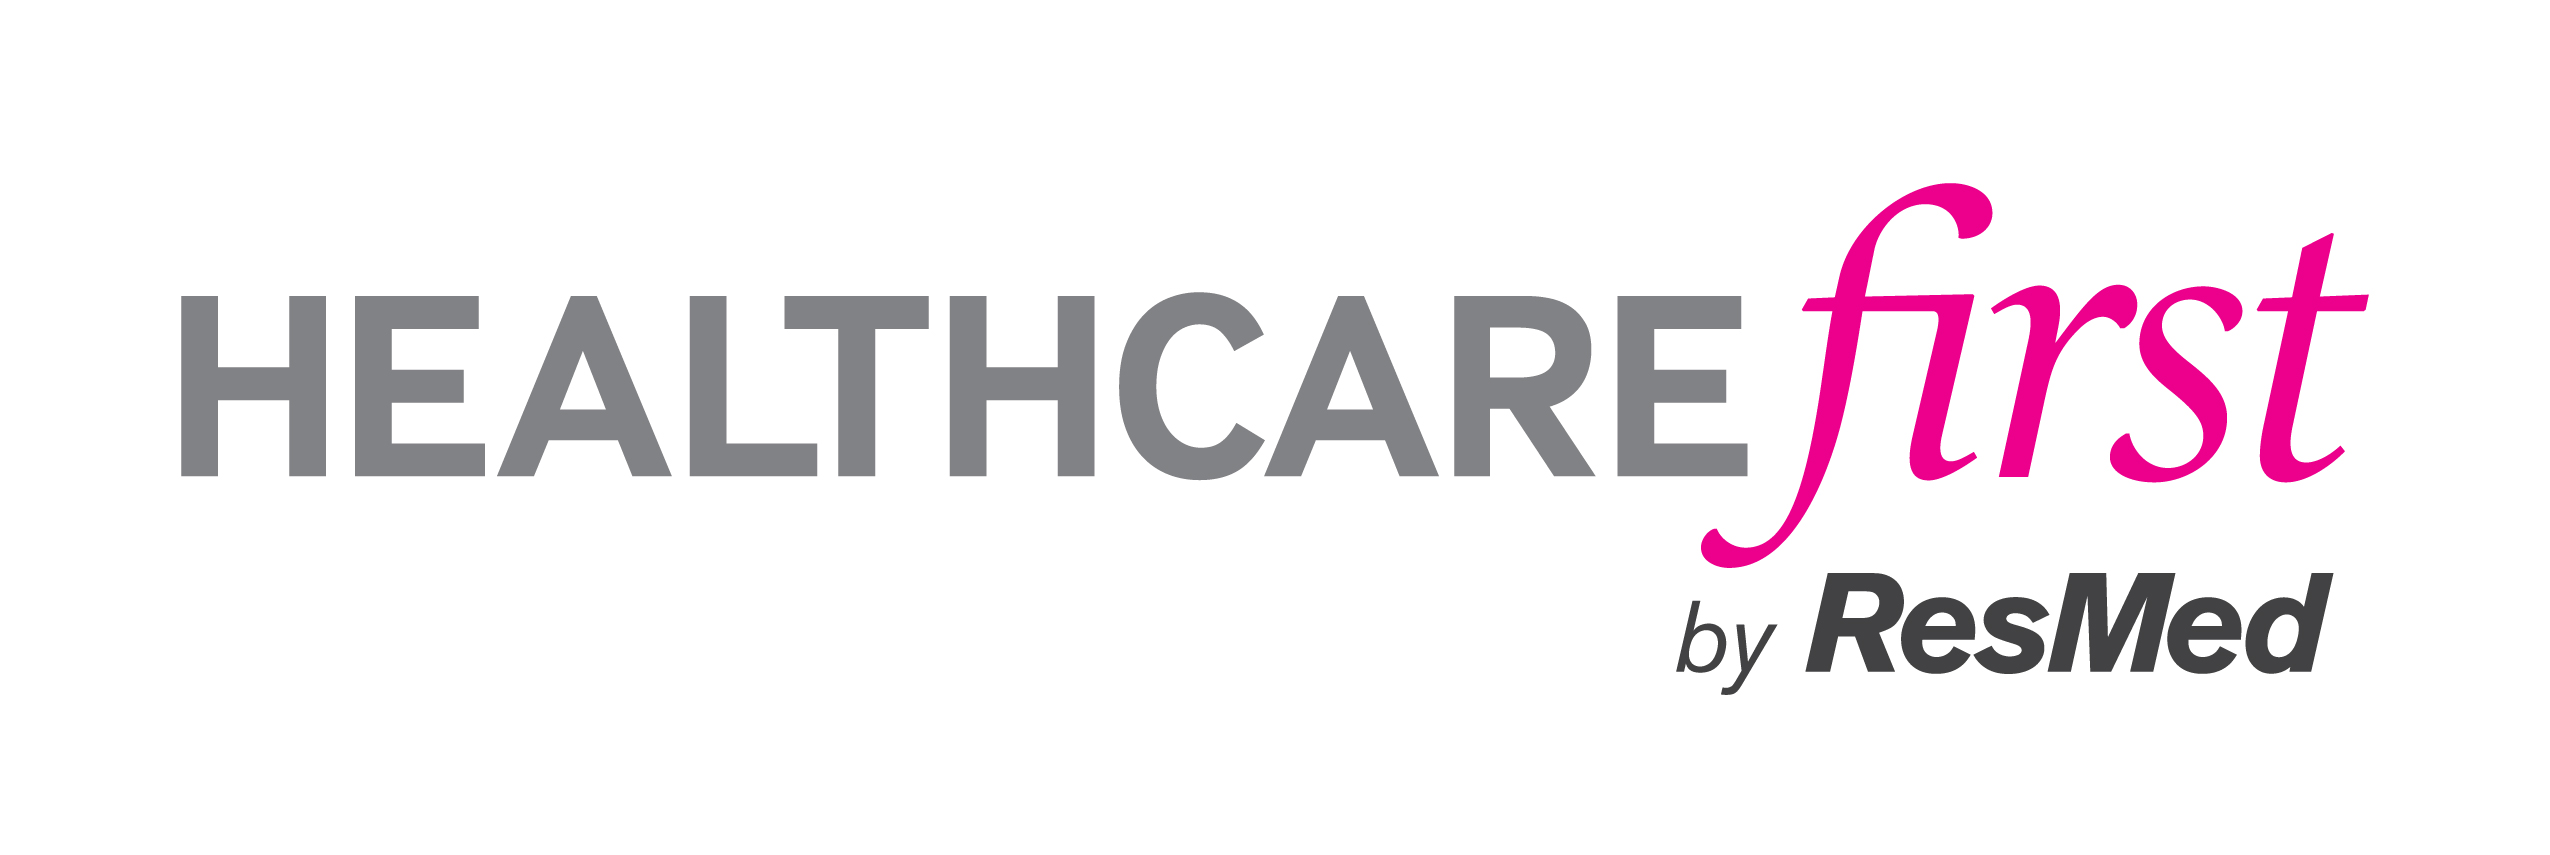 HEALTHCARE first_logo